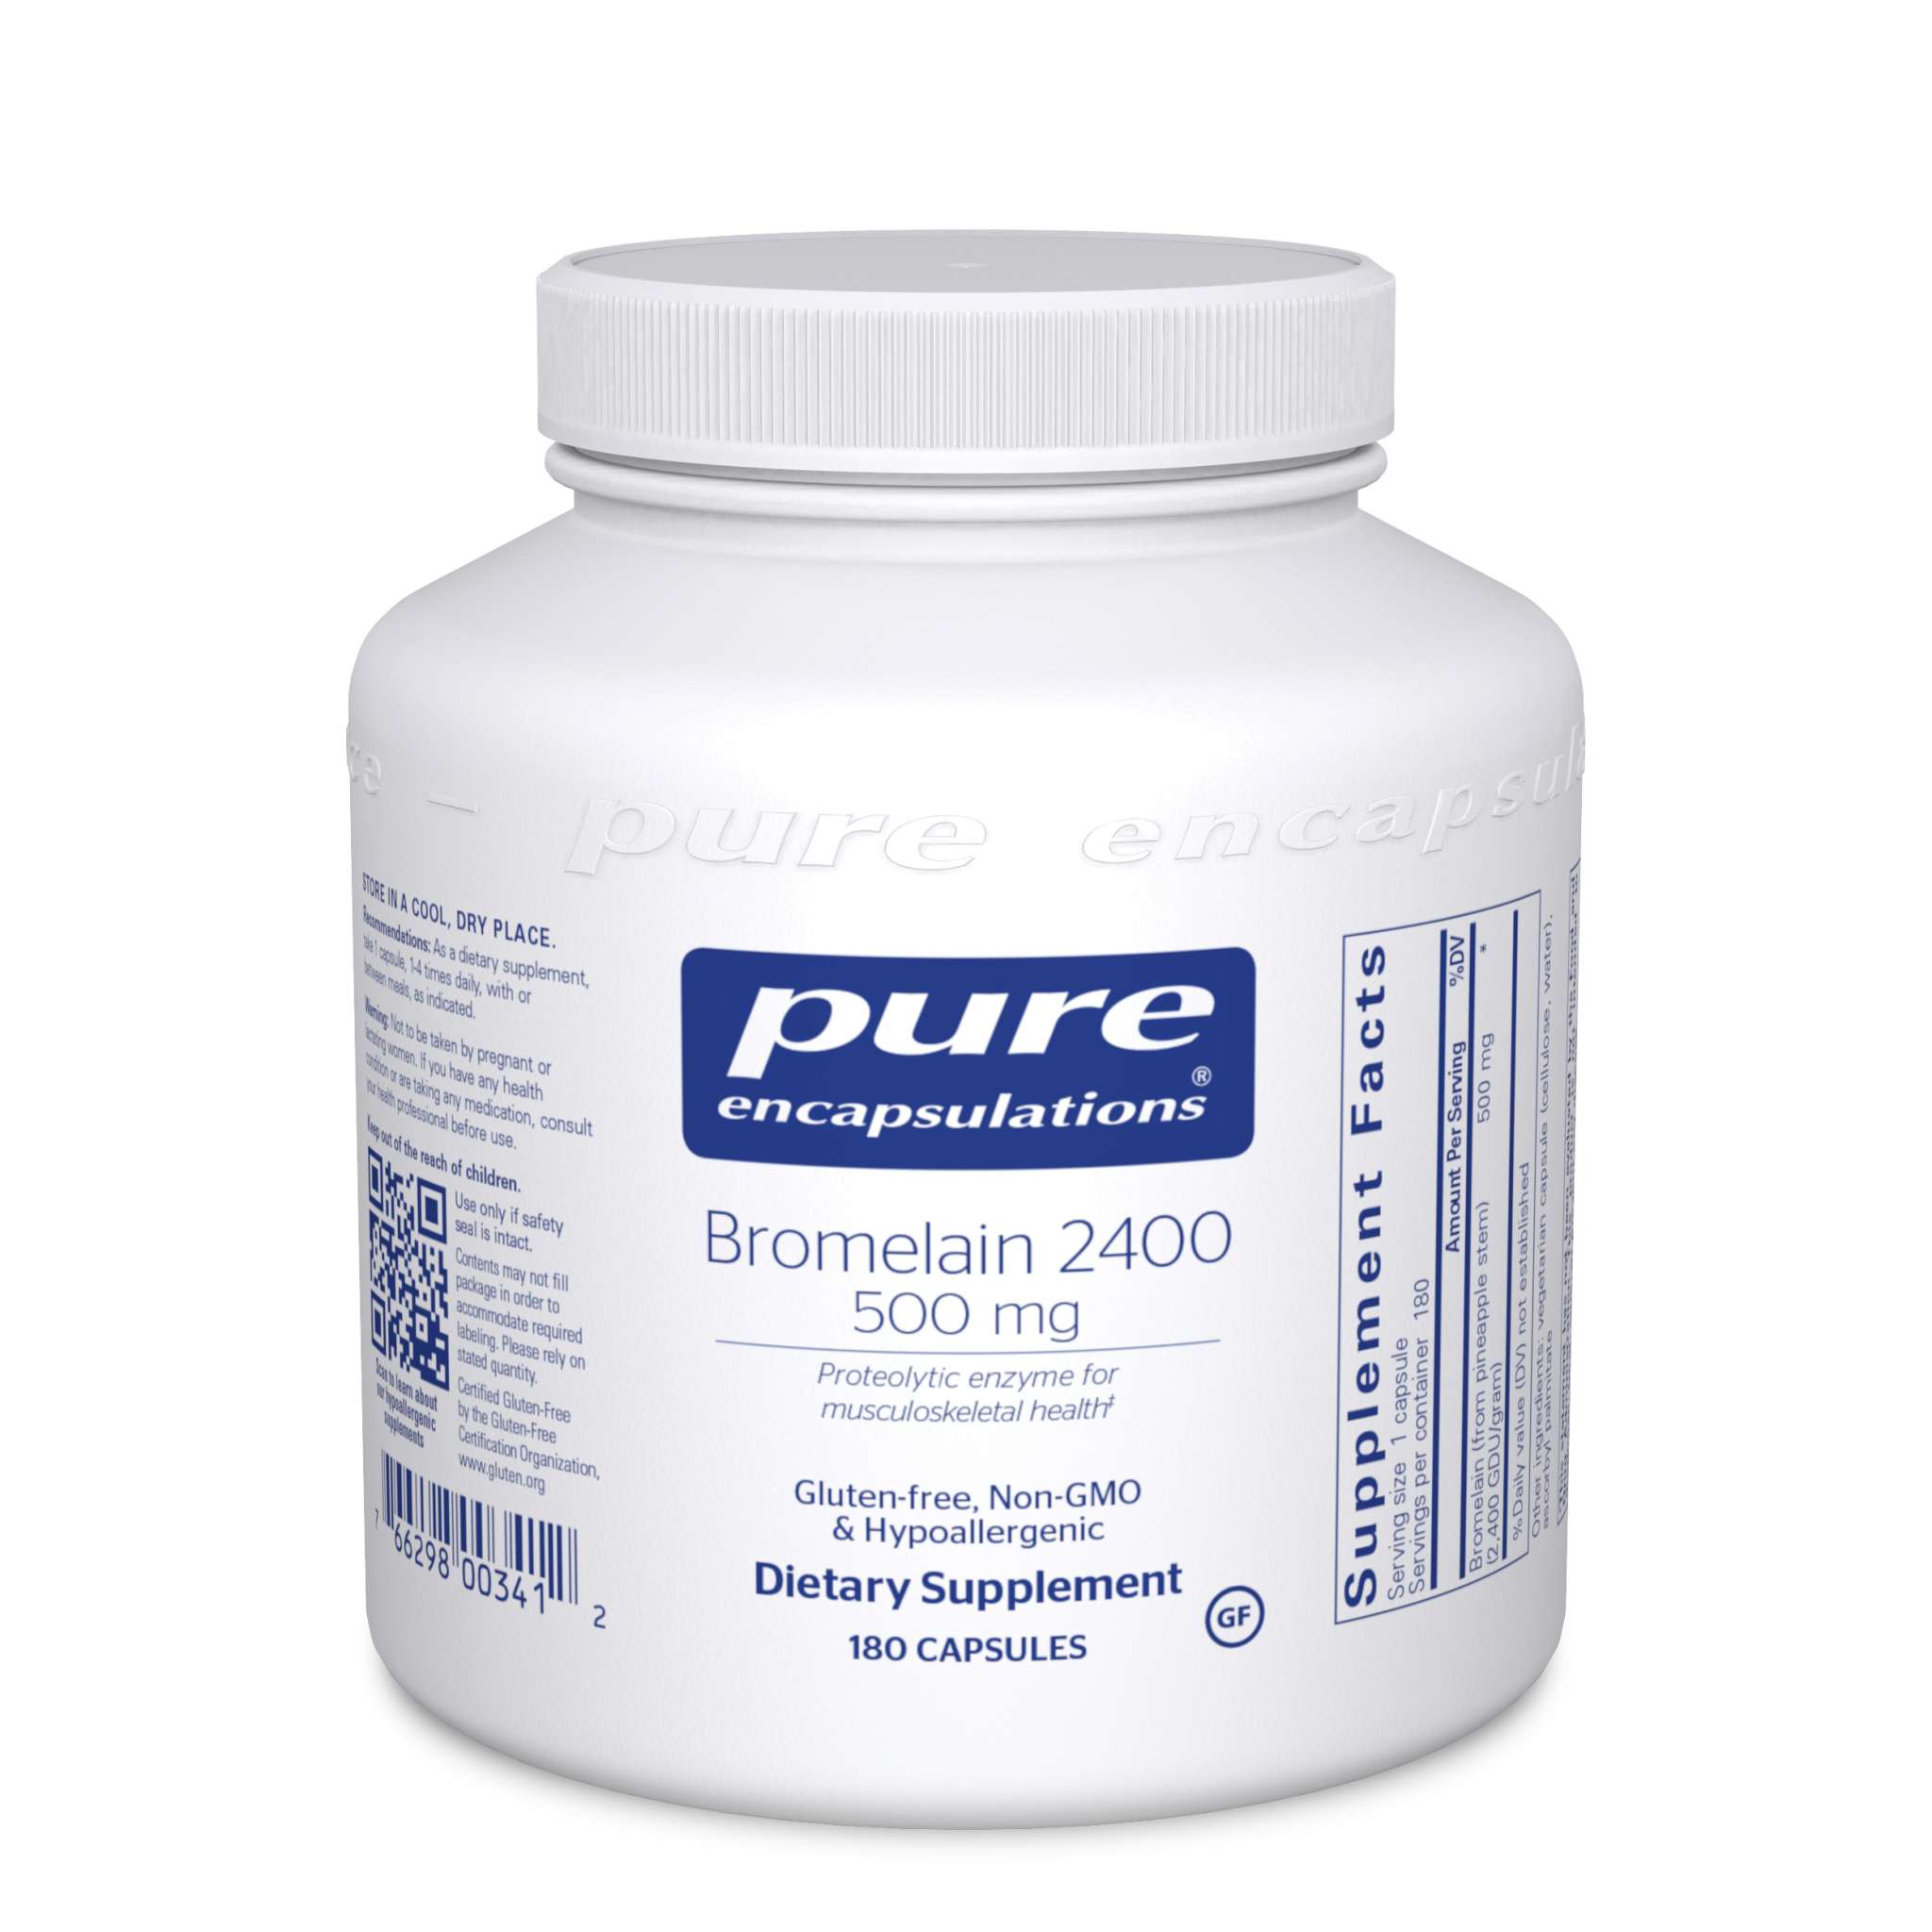 Pure Encapsulations - Bromelain 2400 500 mg